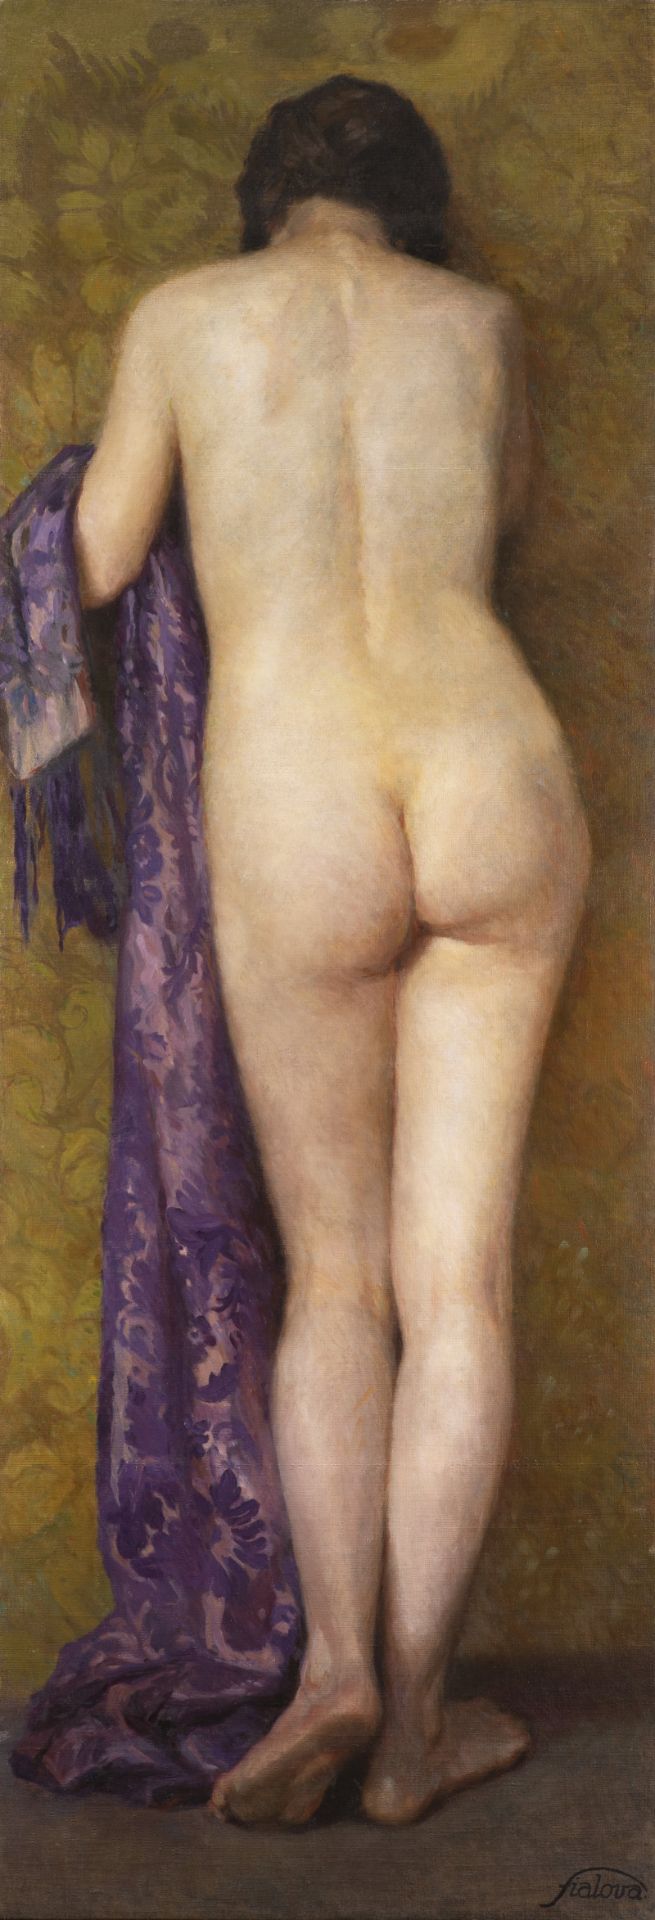 MARIE FIALOVÁ 1860 - 1933: FEMALE NUDE Late 19th/early 20th century Oil on canvas 172 x 61 cm